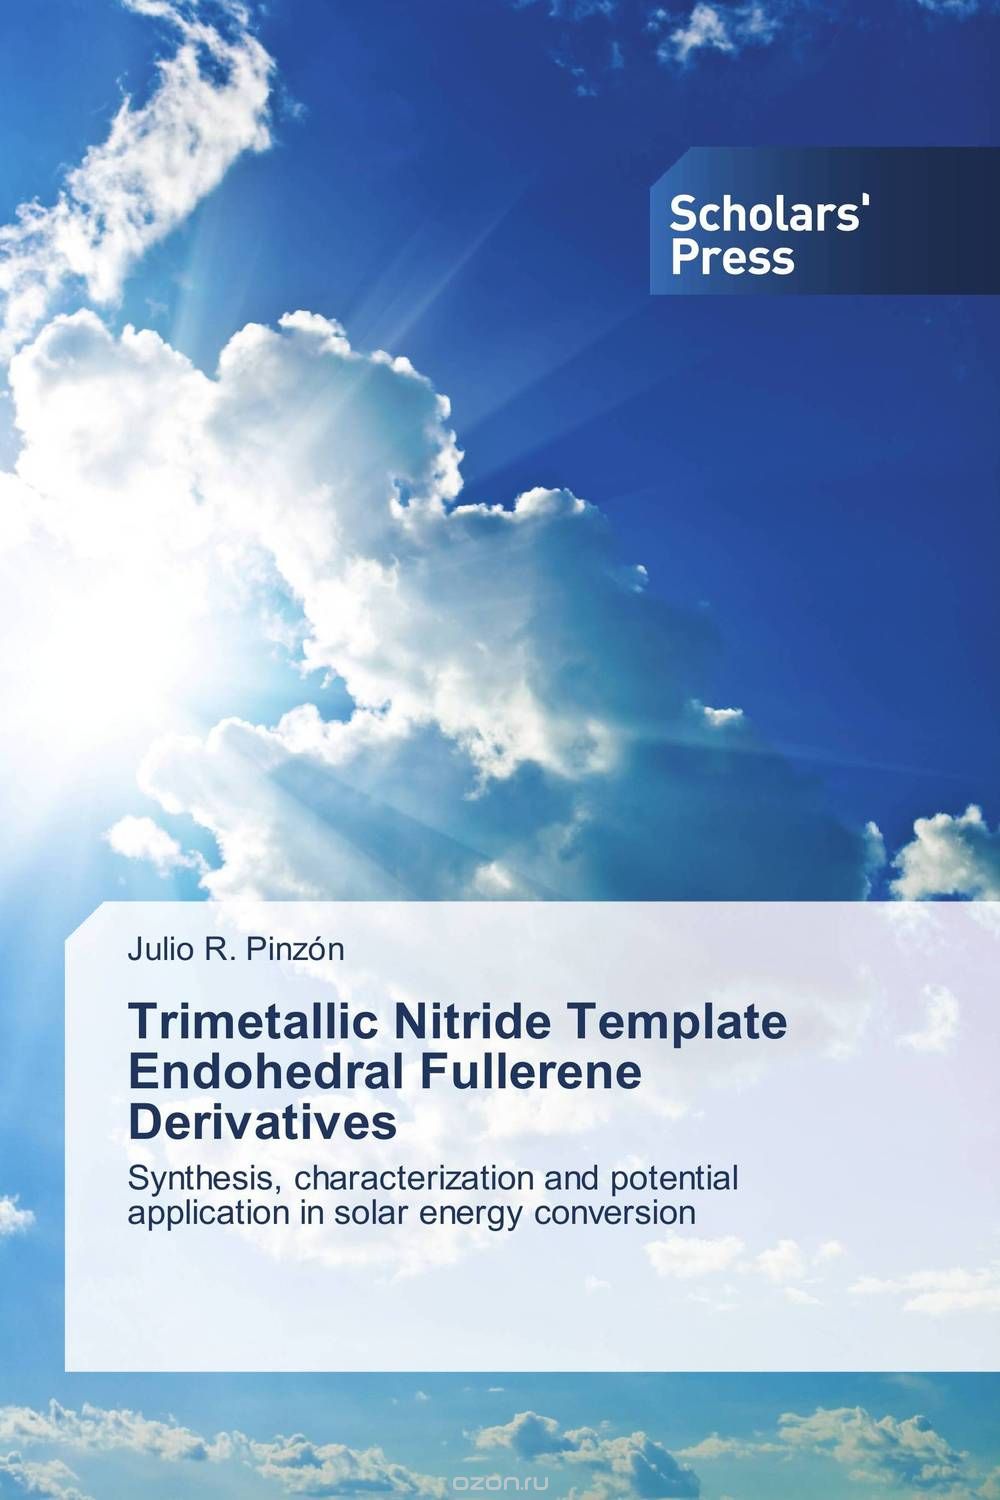 Скачать книгу "Trimetallic Nitride Template Endohedral Fullerene Derivatives"